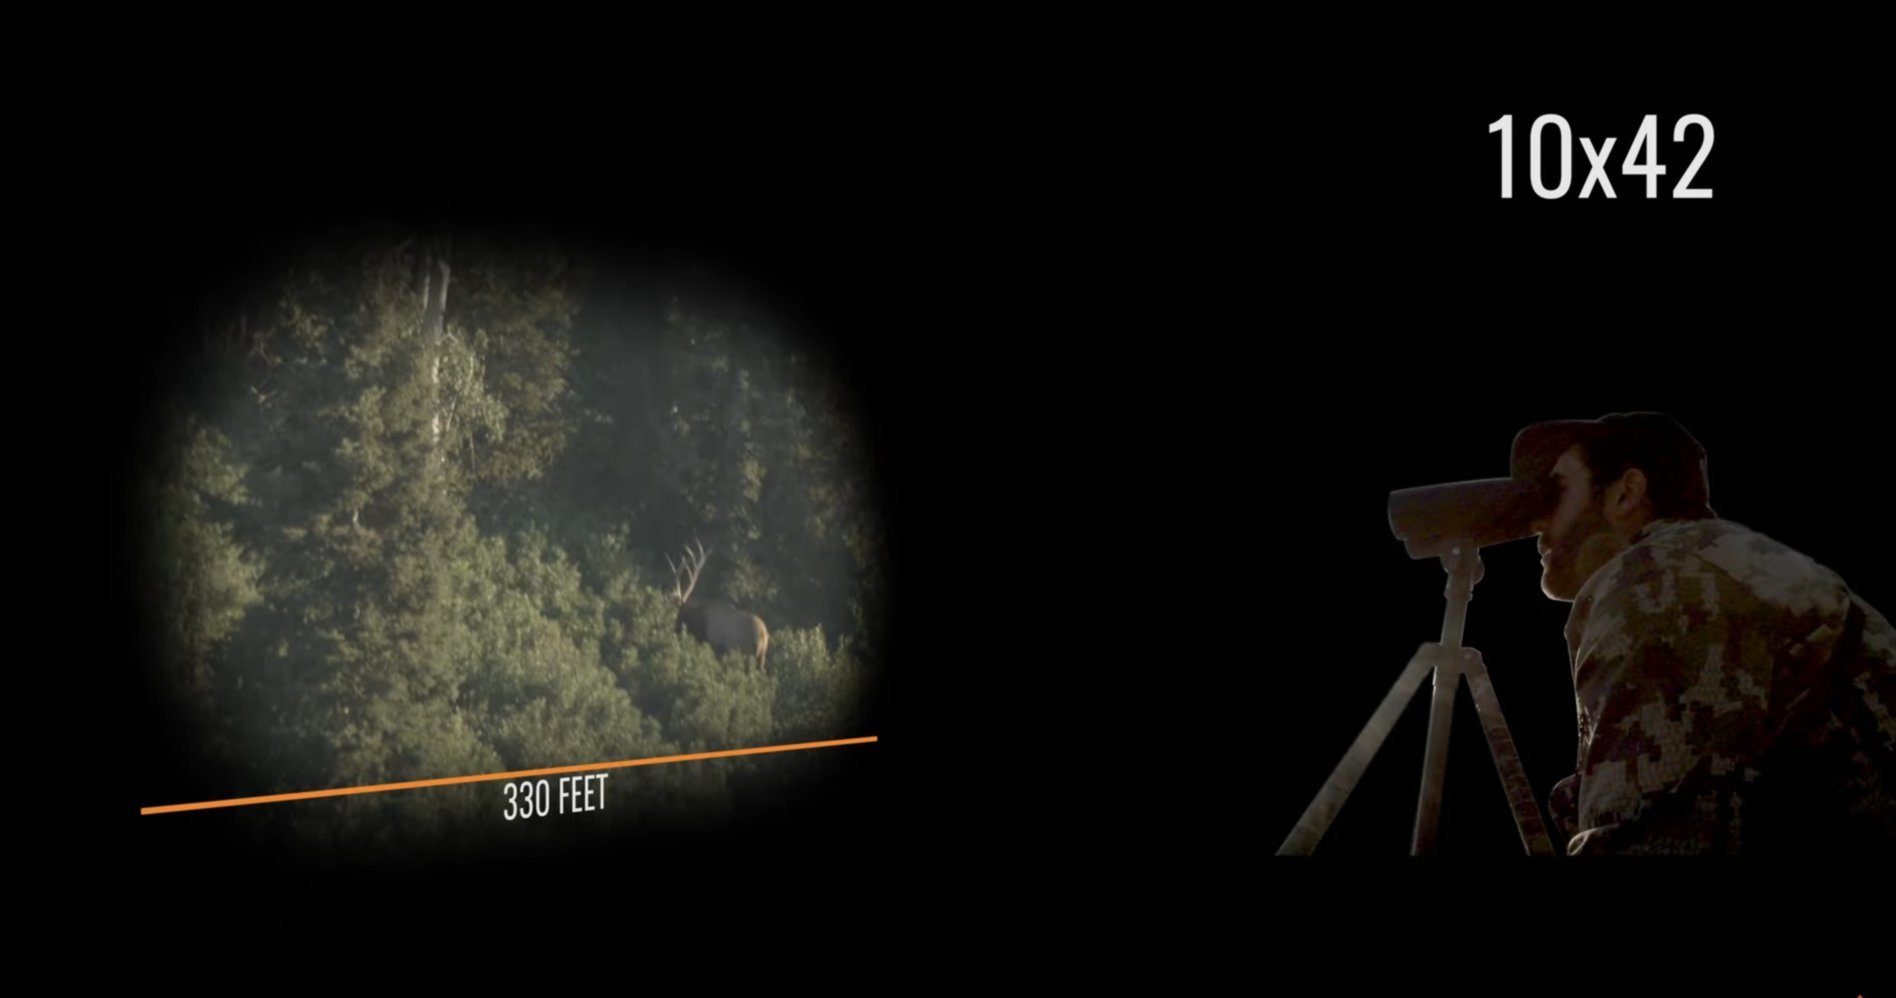 Focusing Mechanisms of binoculars for hunting